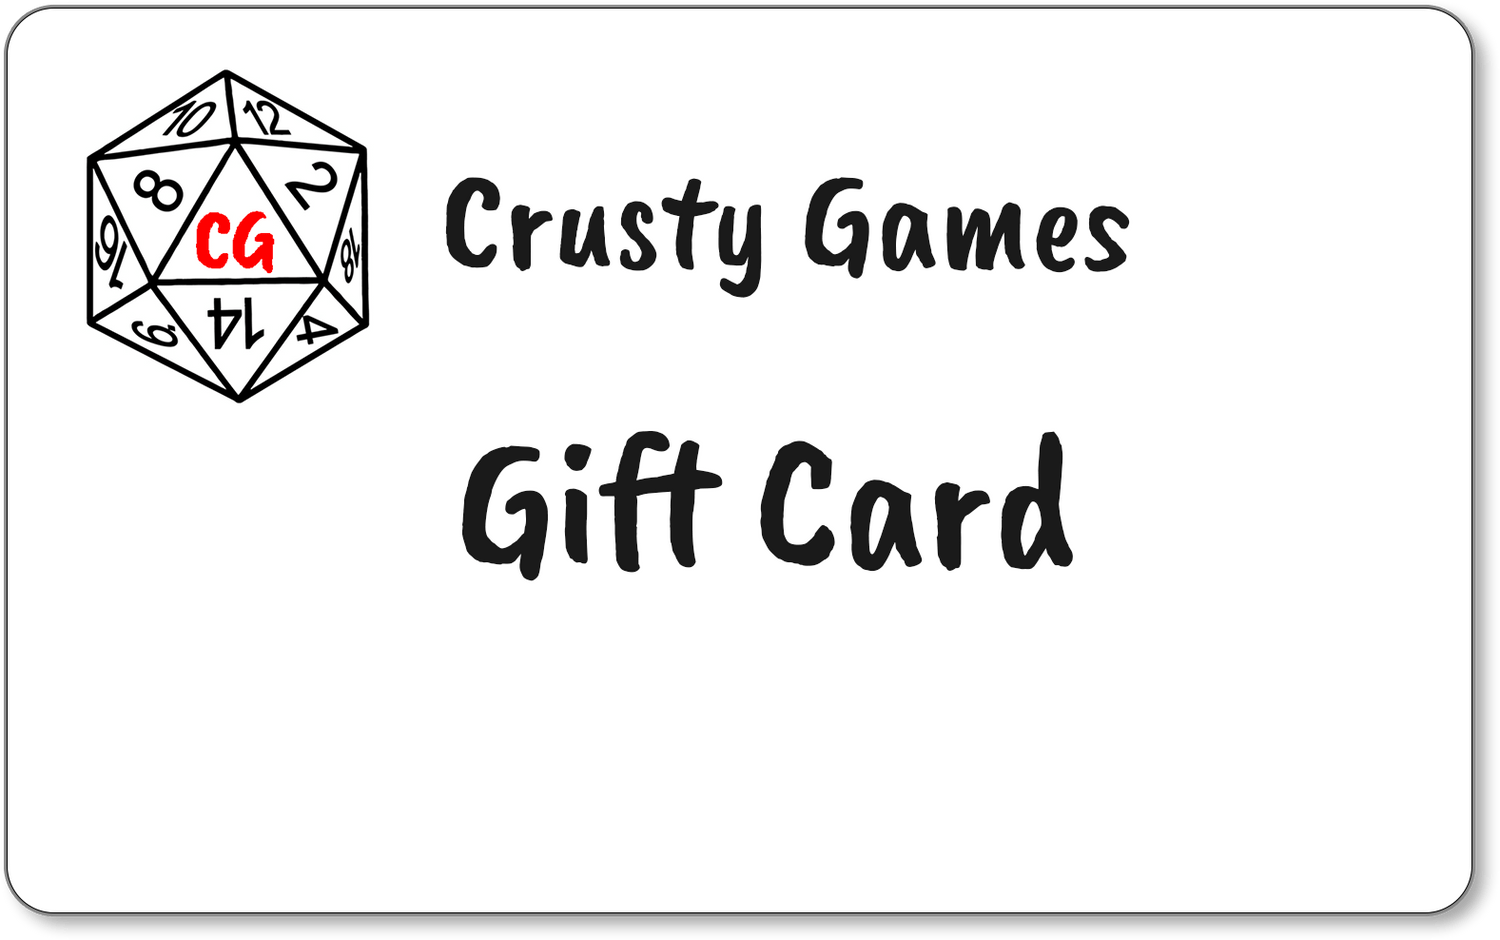 Crusty Games Gift Card - Crusty Games